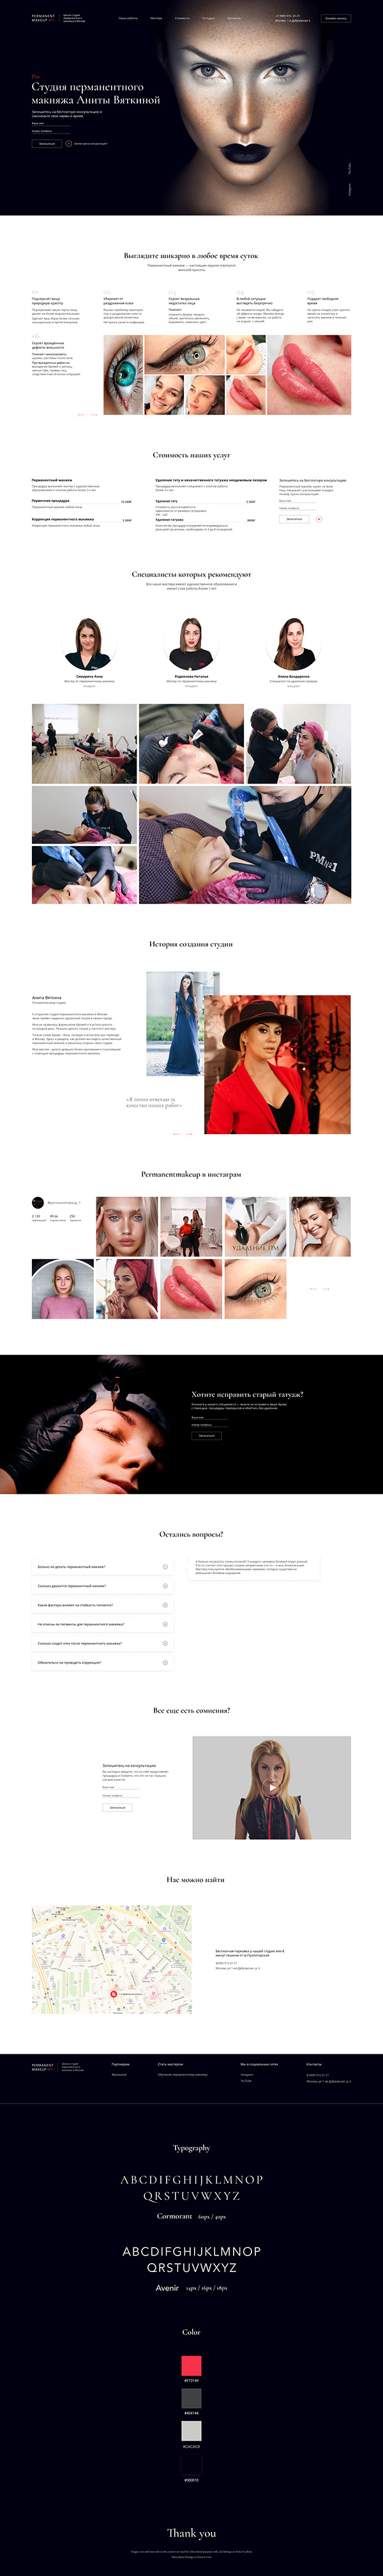 Website permanent makeup